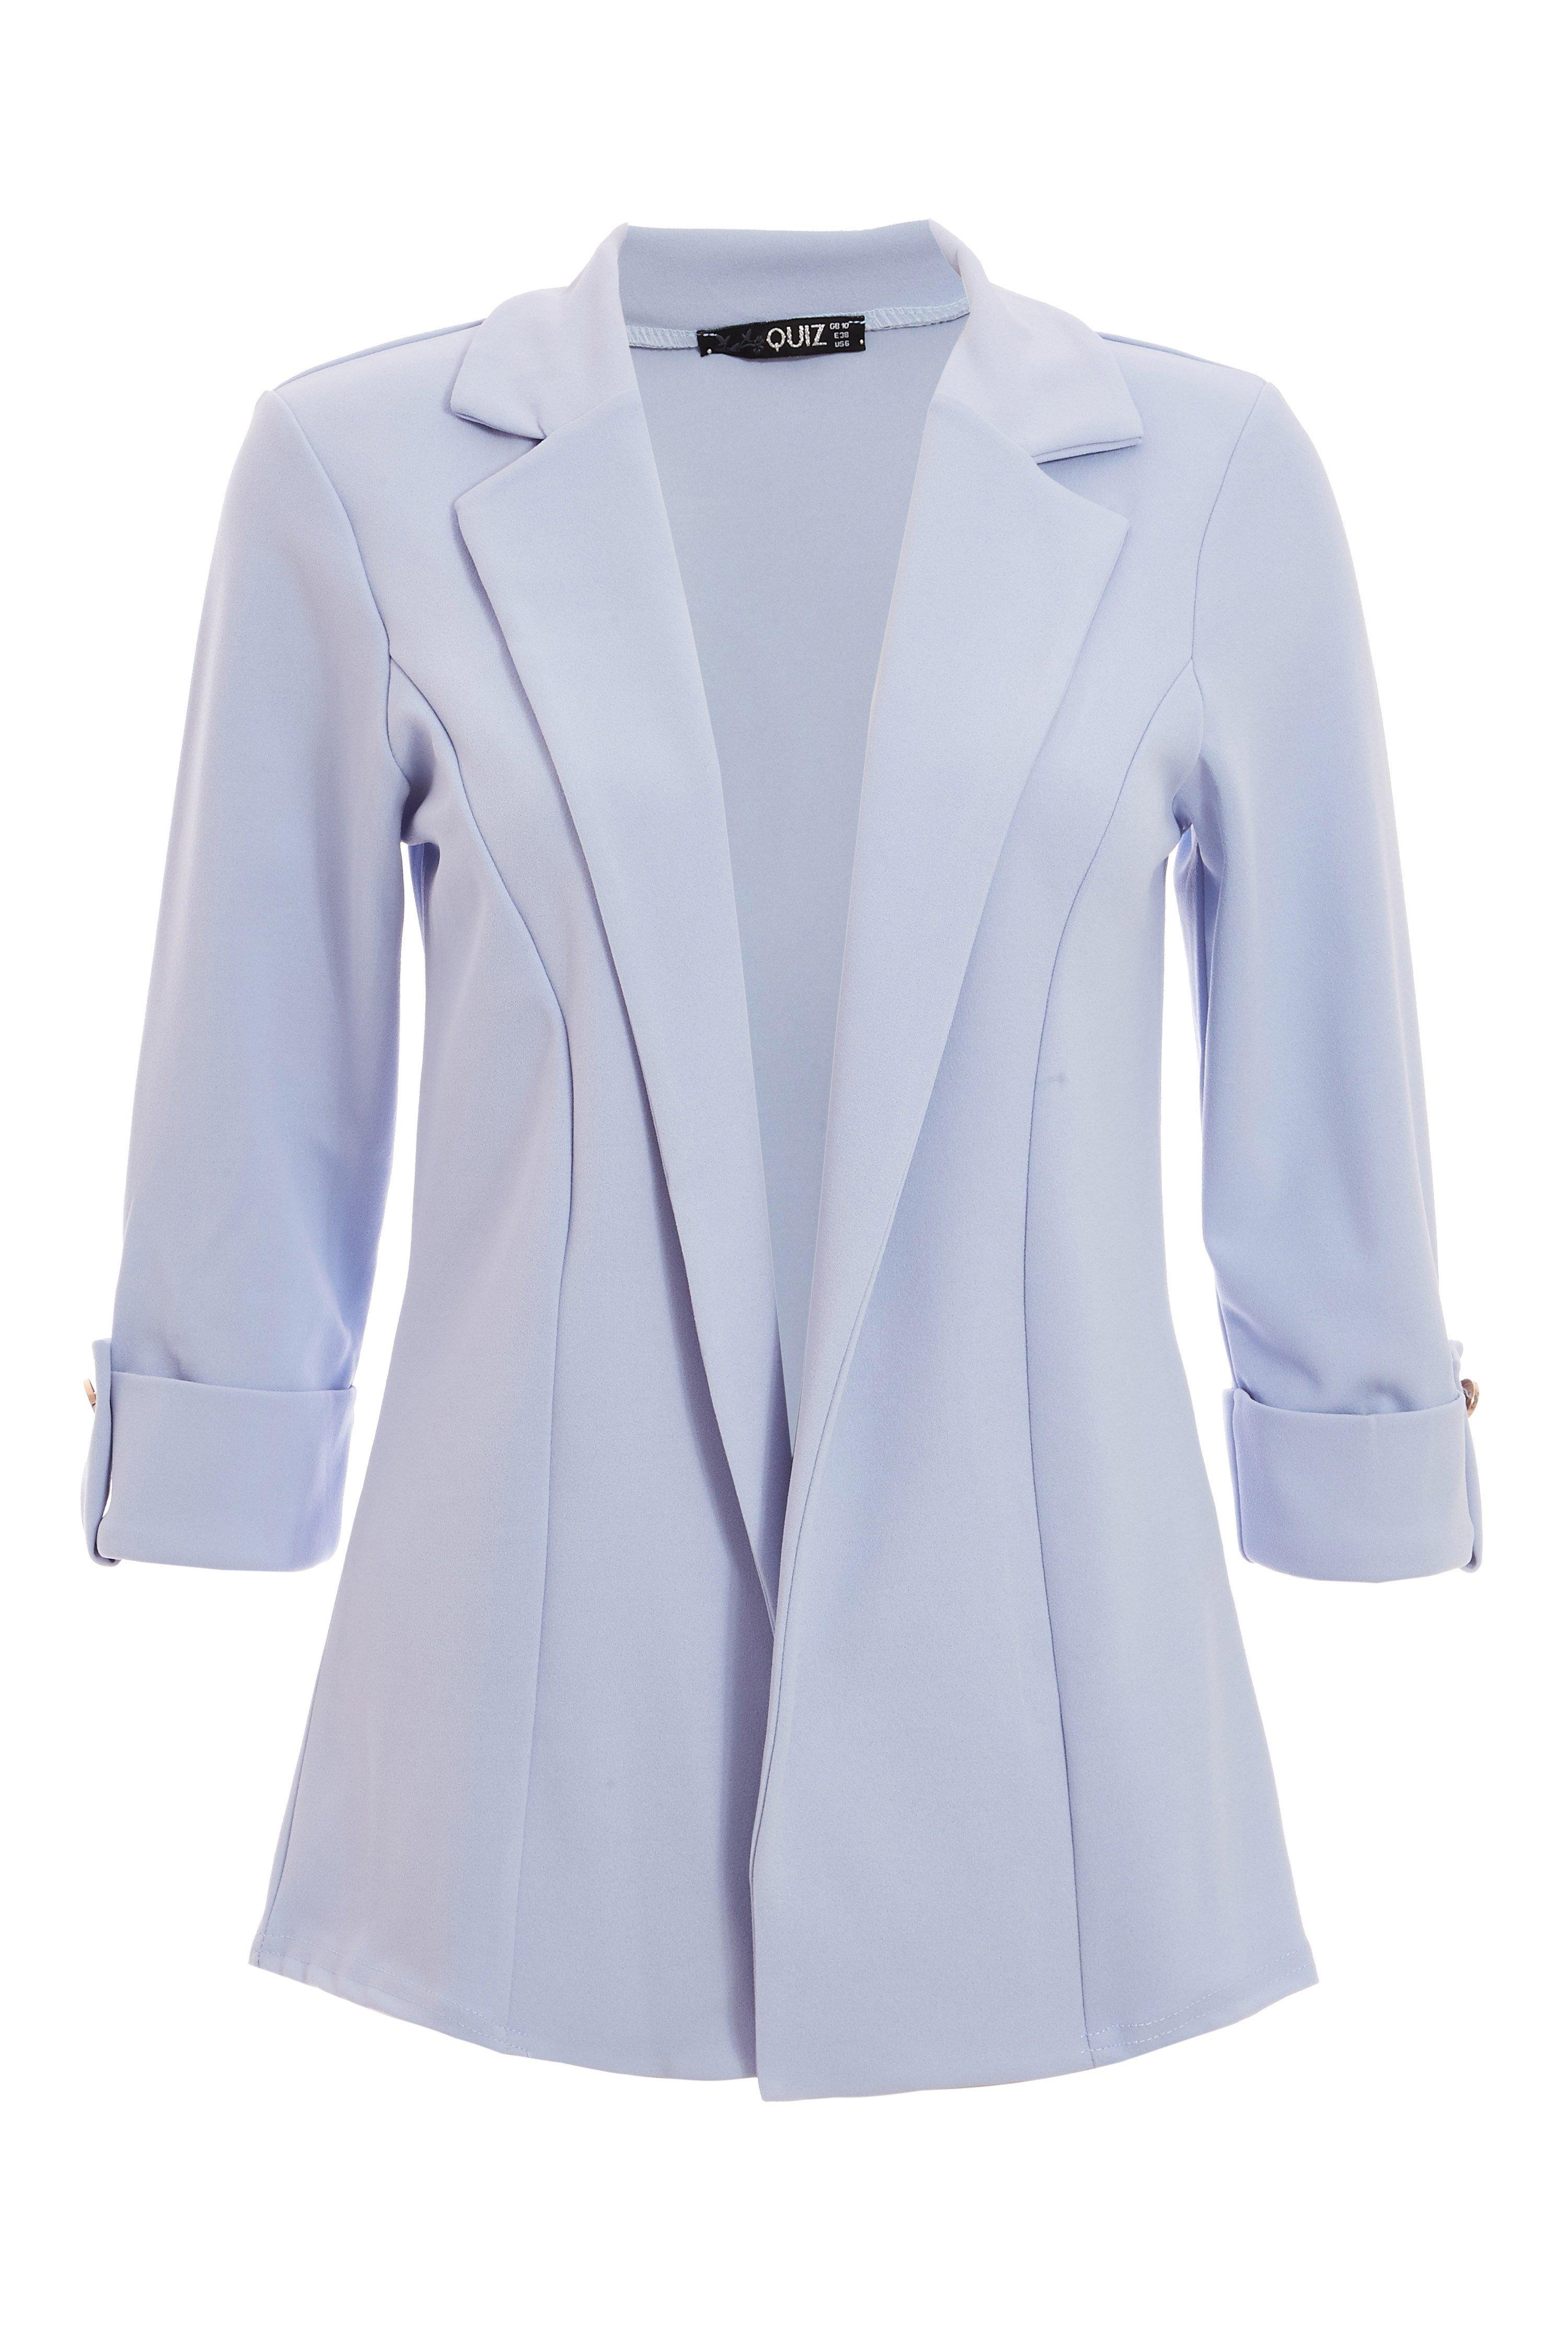 Pale Blue 3/4 Sleeve Blazer - Quiz Clothing